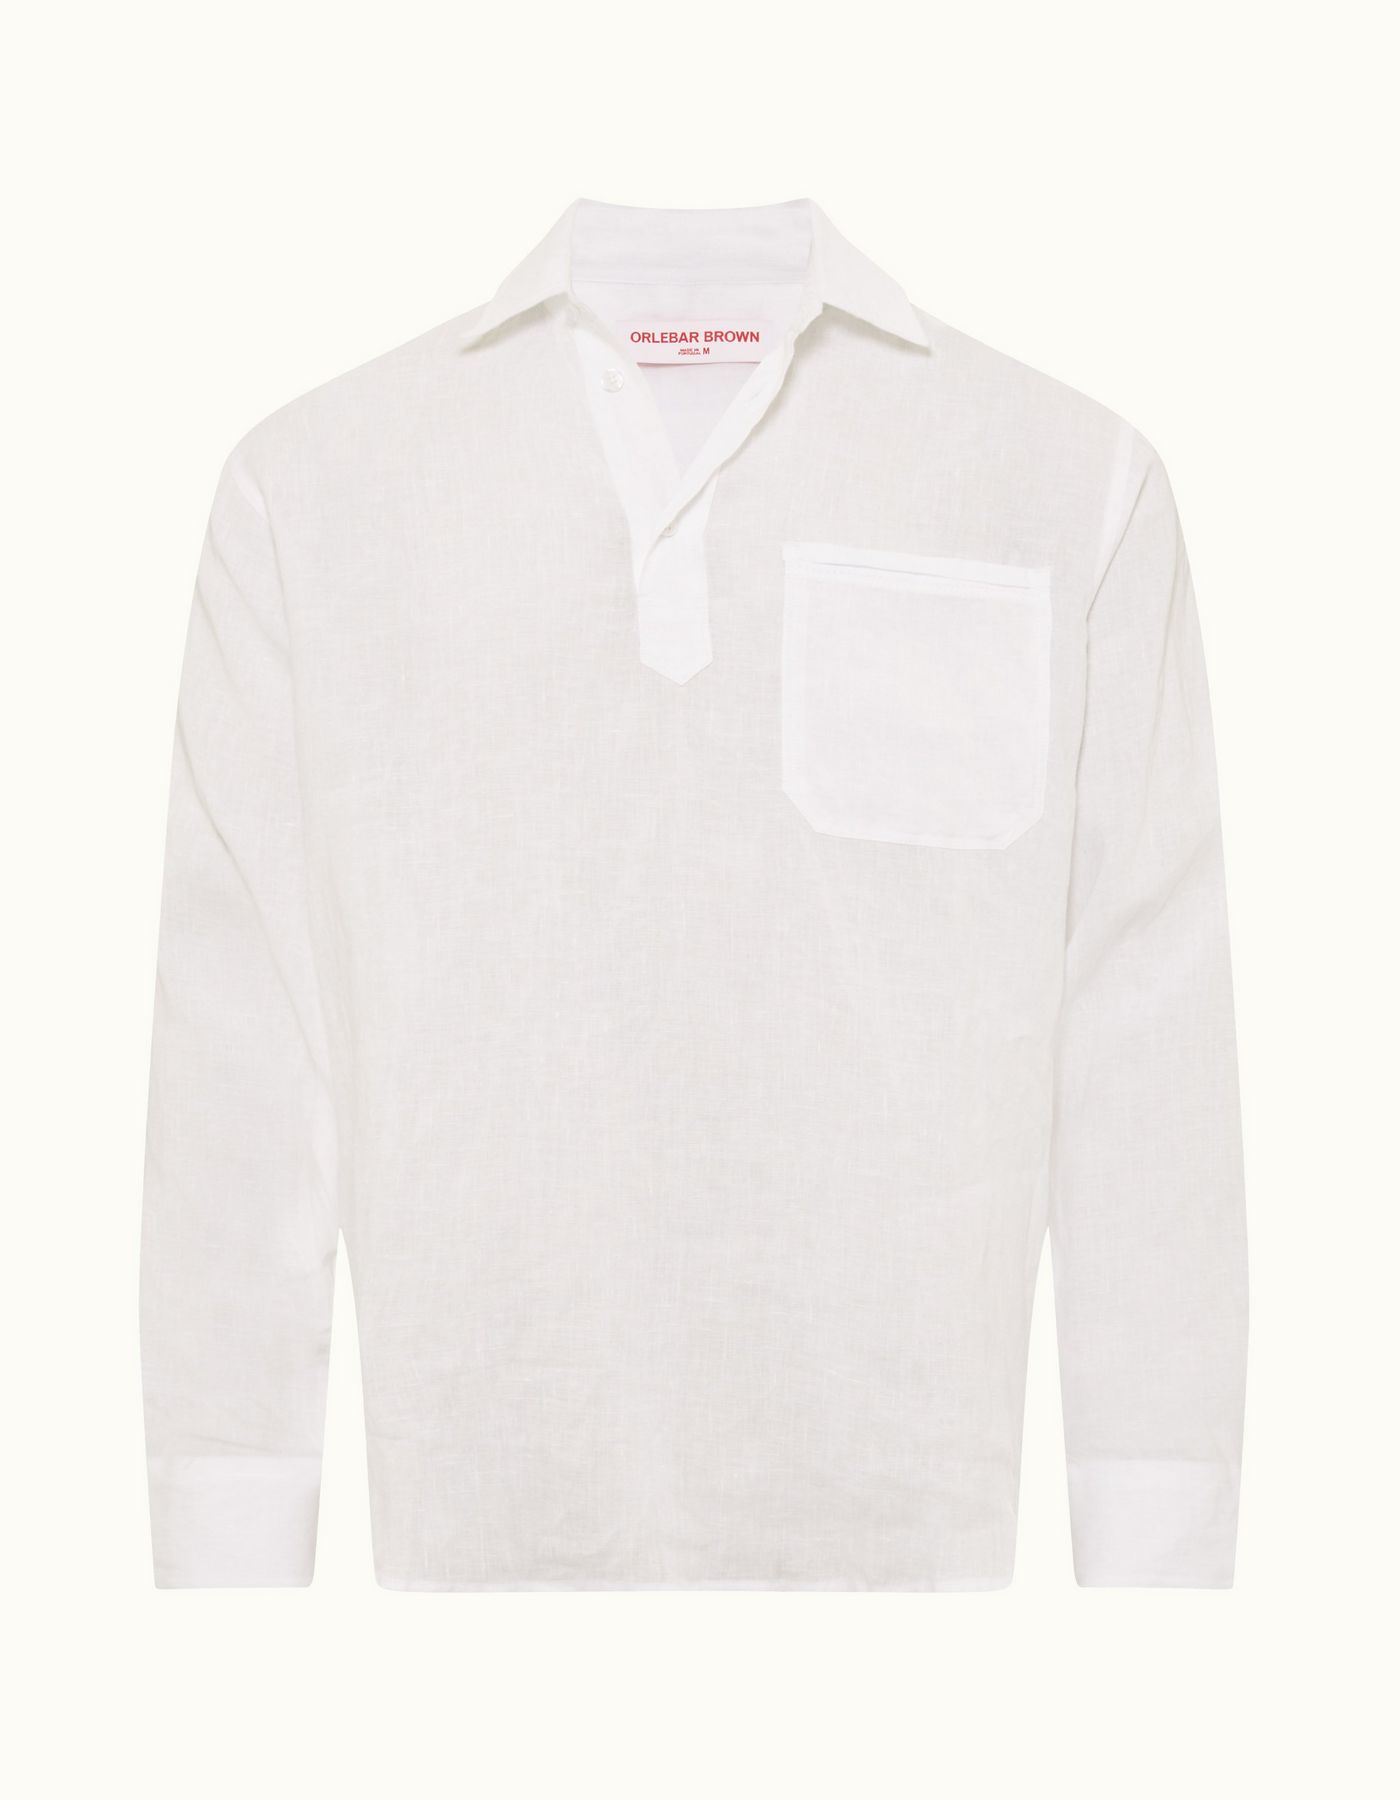 Shanklin Linen - Mens White Relaxed Fit Overhead Laundered Linen Shirt